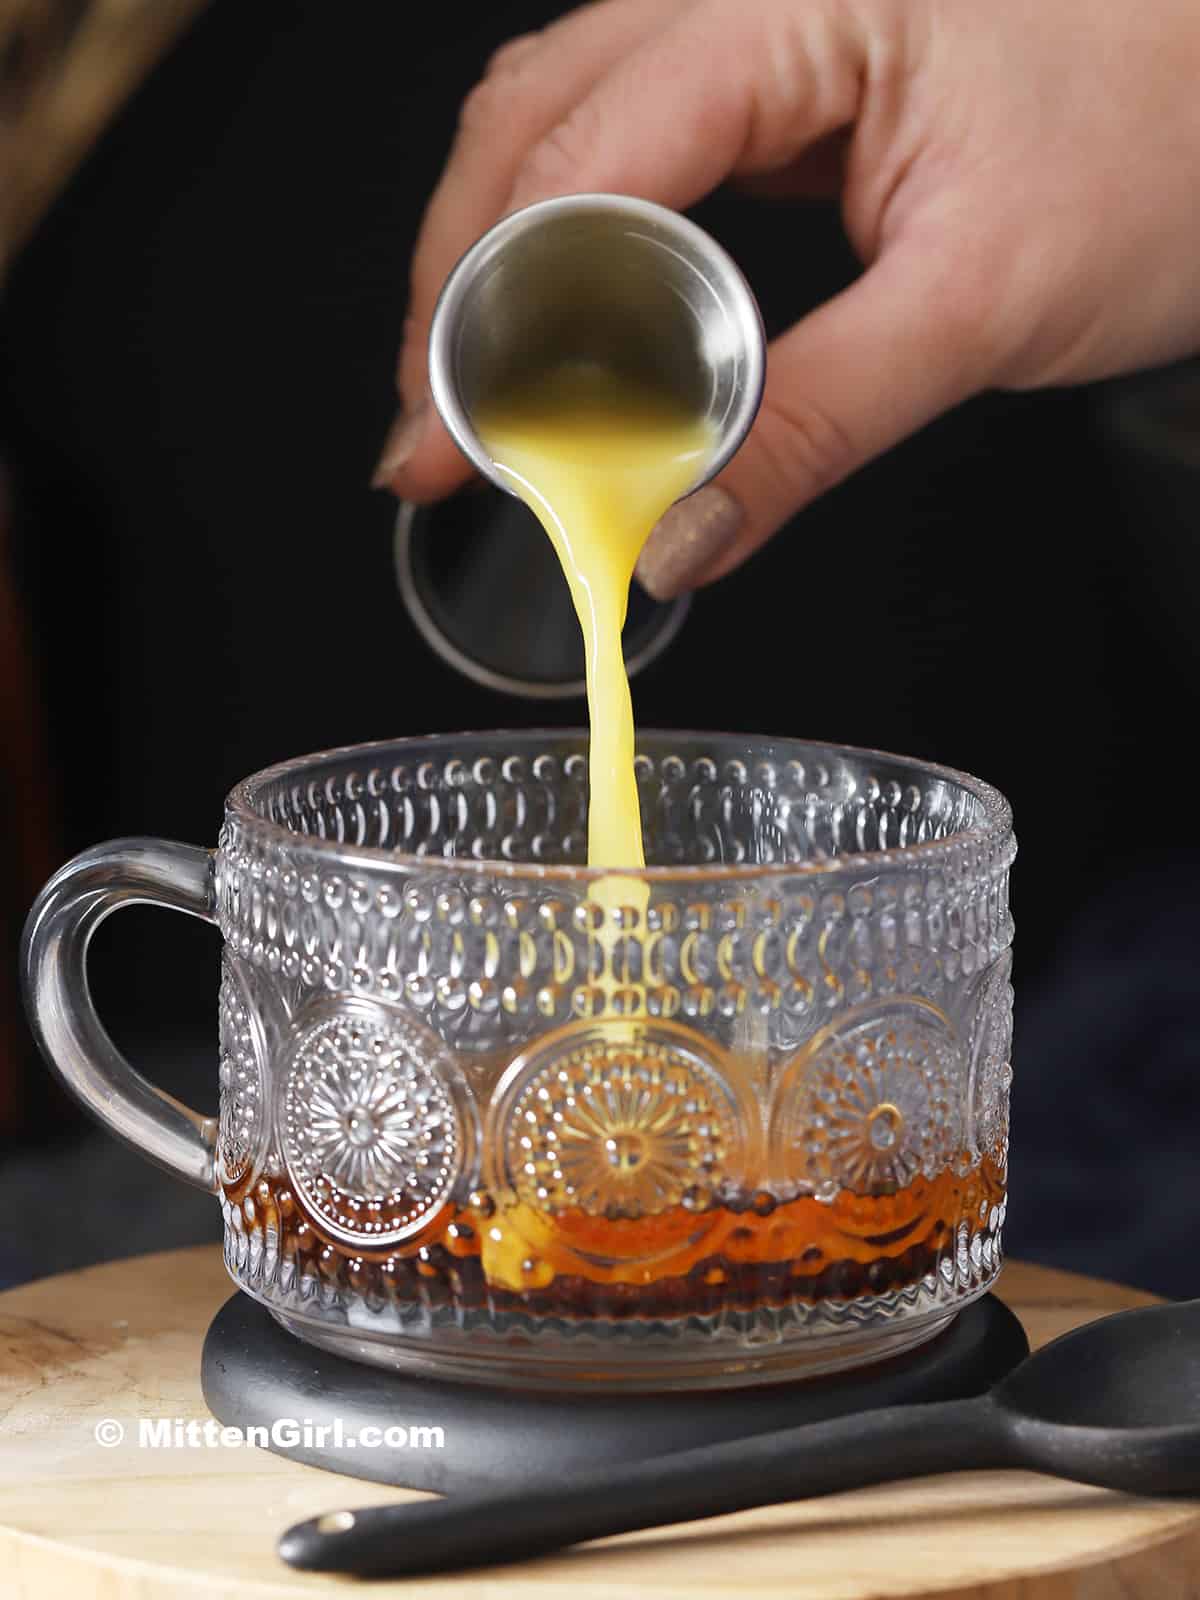 Orange juice being poured into a mug.